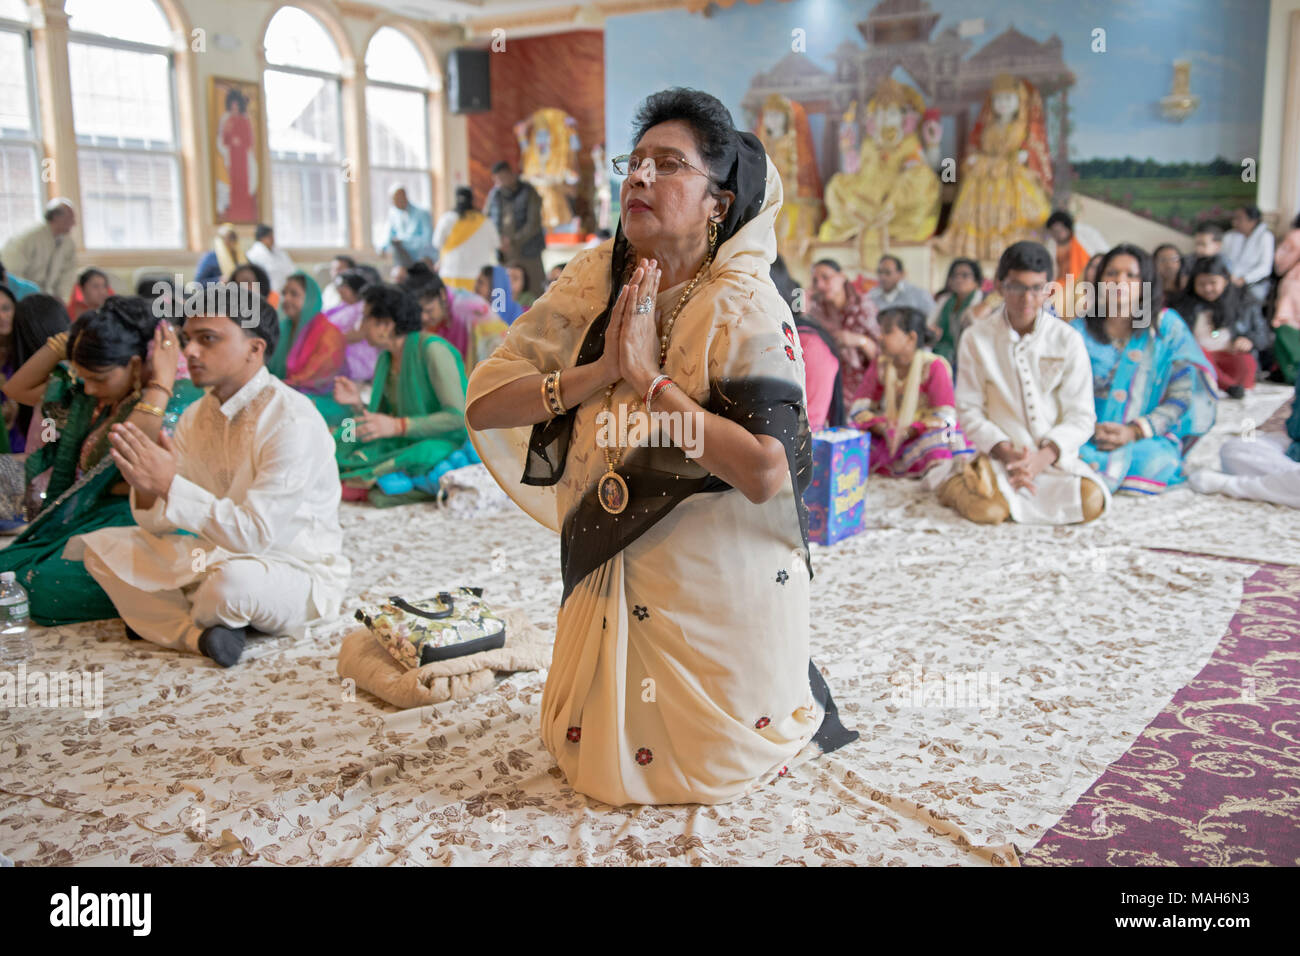 A Hindu worshiper praying & meditating at the Tulsi Mandir temple in South Richmond Hill, Queens, New York. Stock Photo